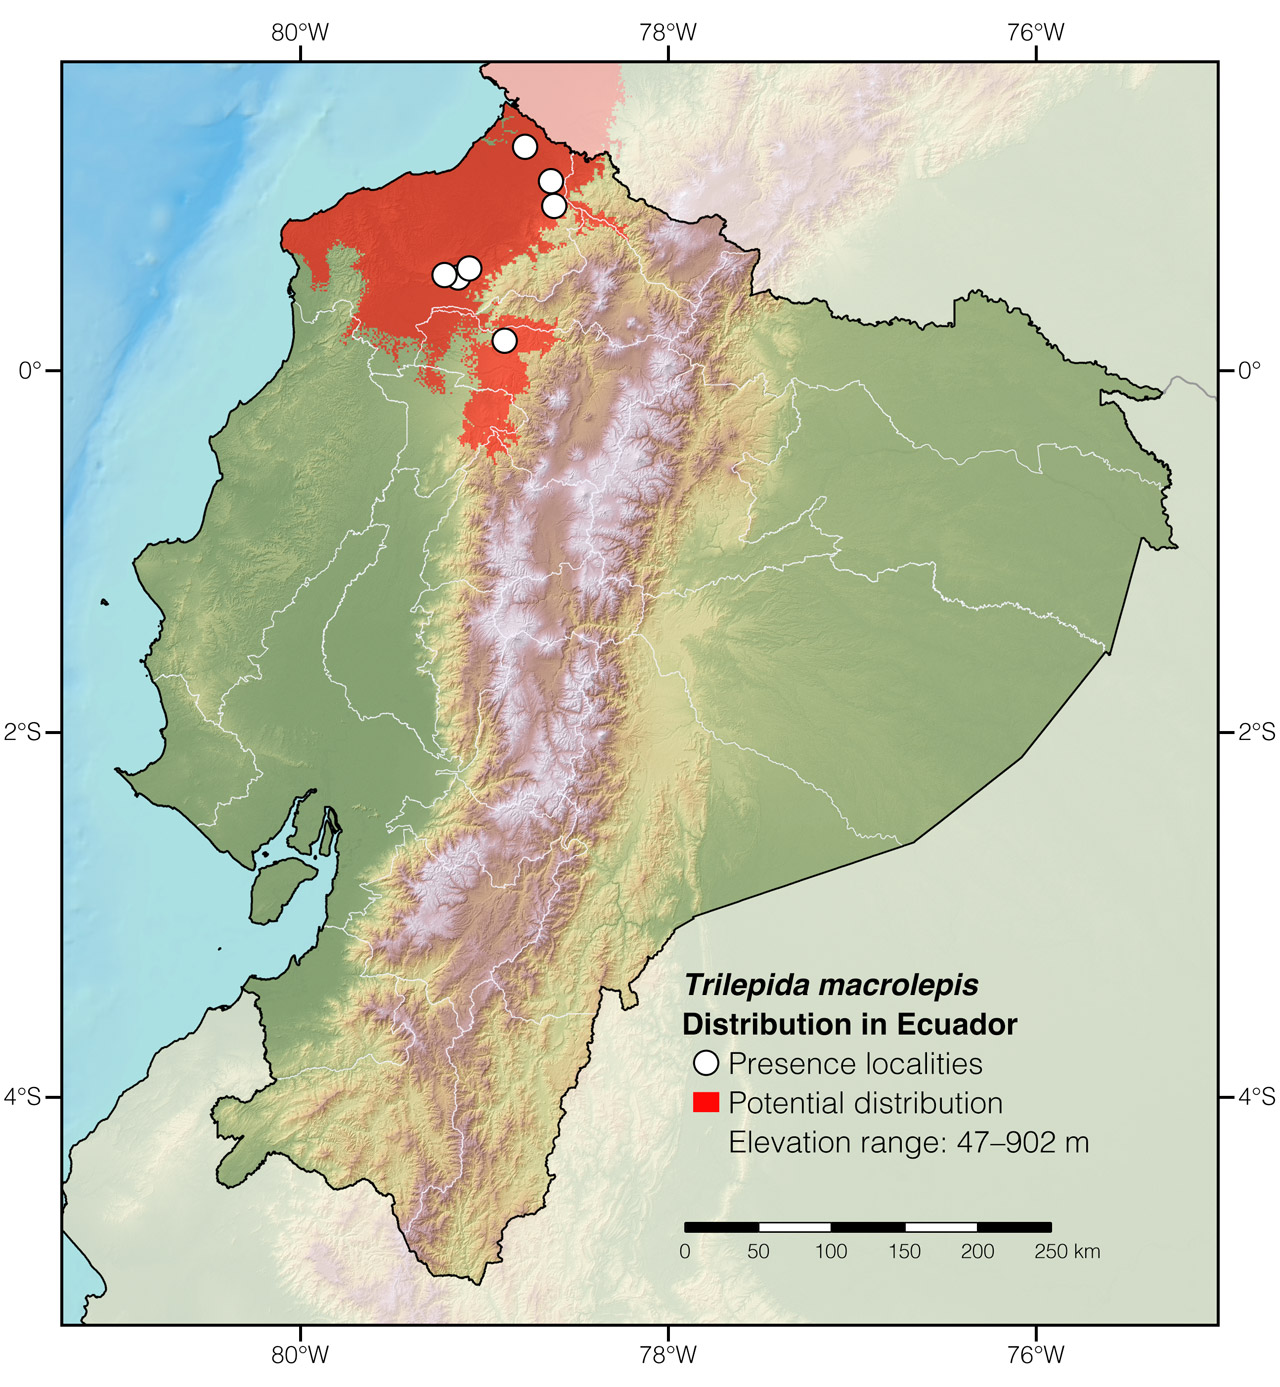 Distribution of Trilepida macrolepis in Ecuador